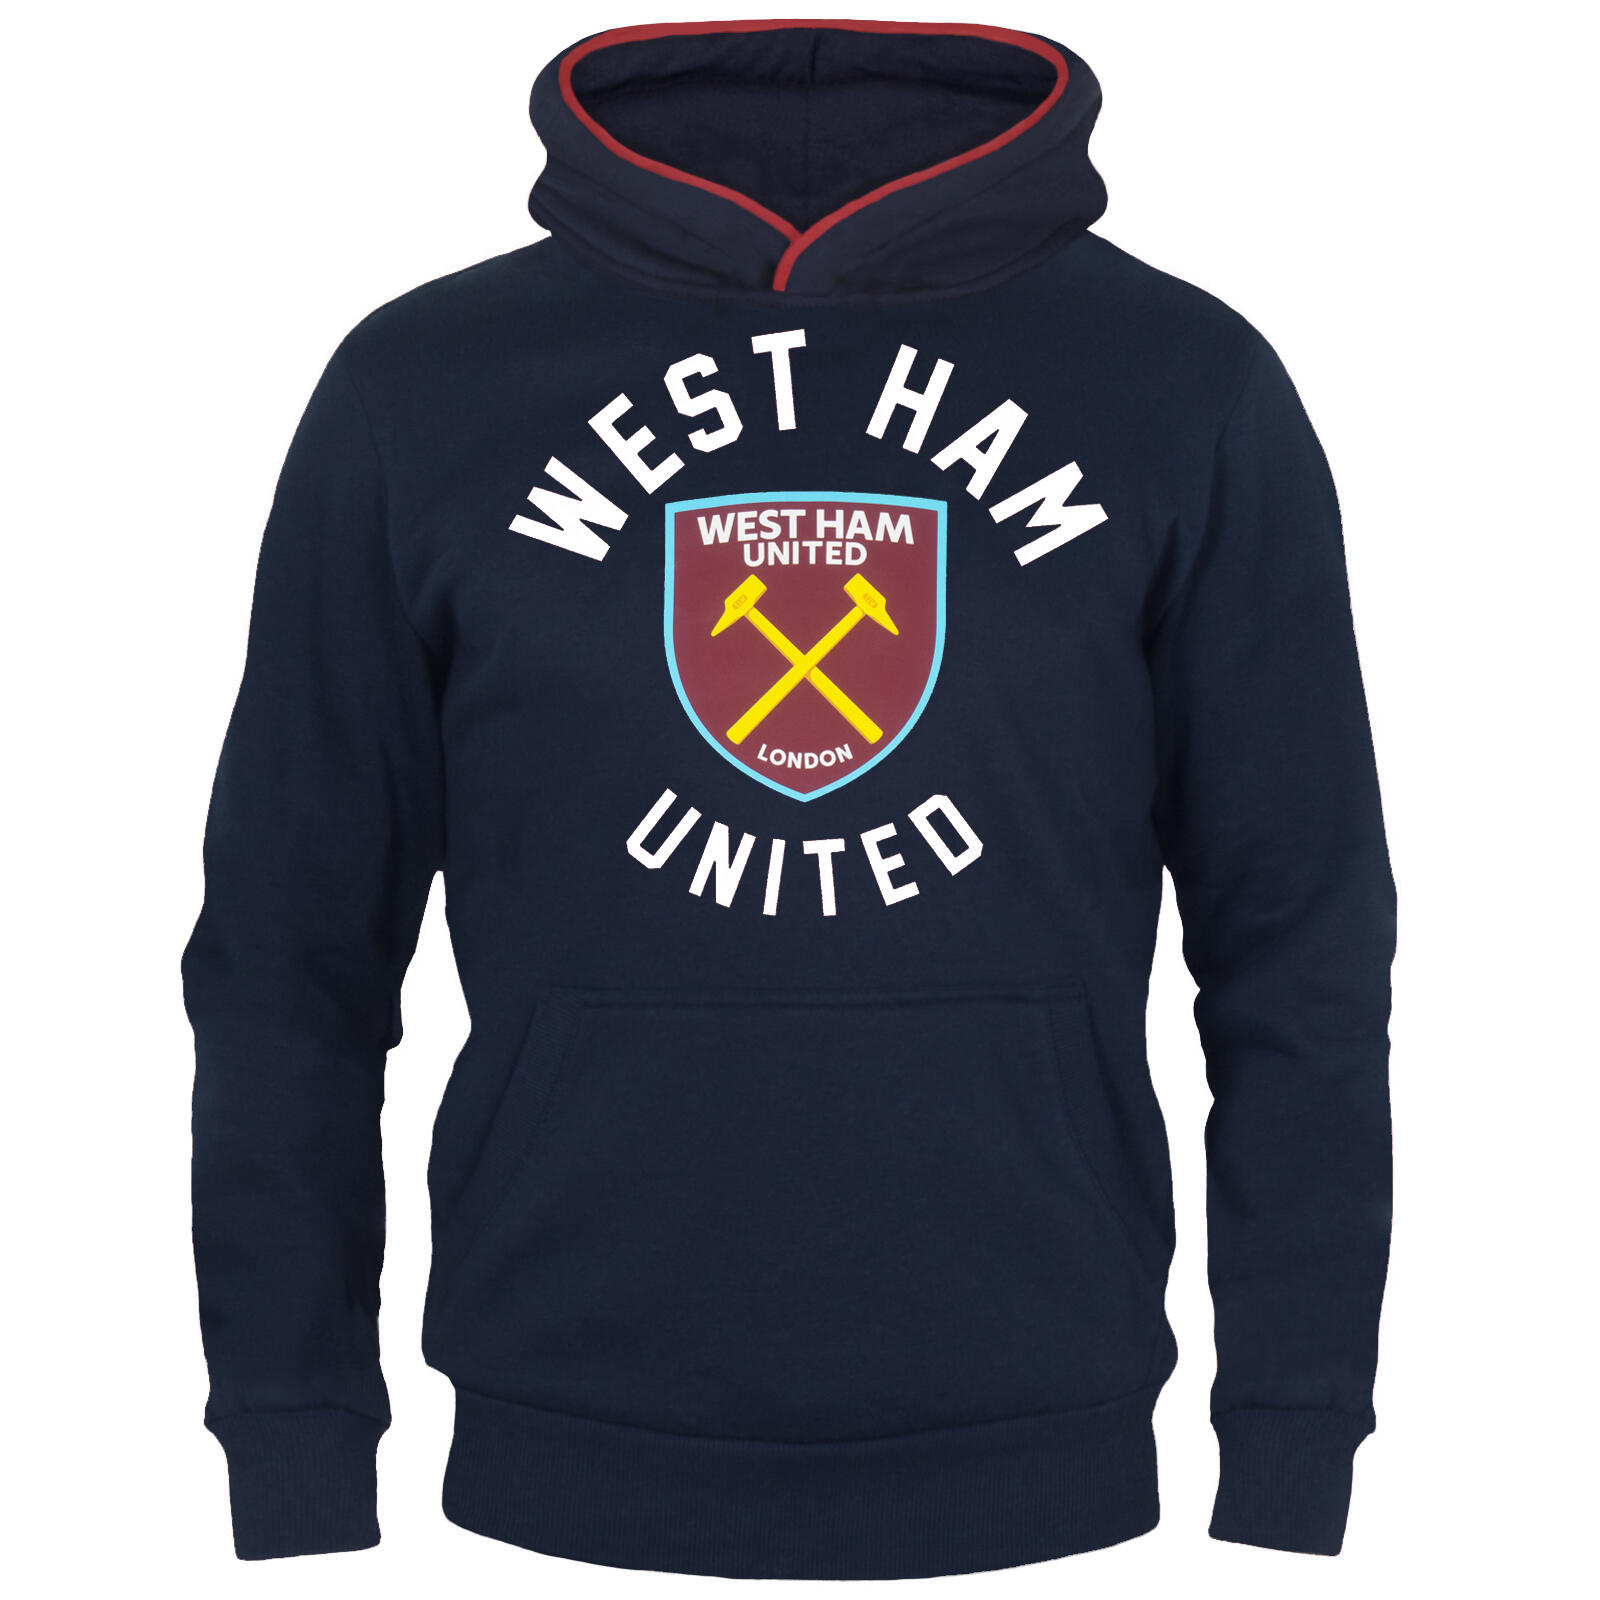 WEST HAM UNITED West Ham United Boys Hoody Fleece Graphic Kids OFFICIAL Football Gift